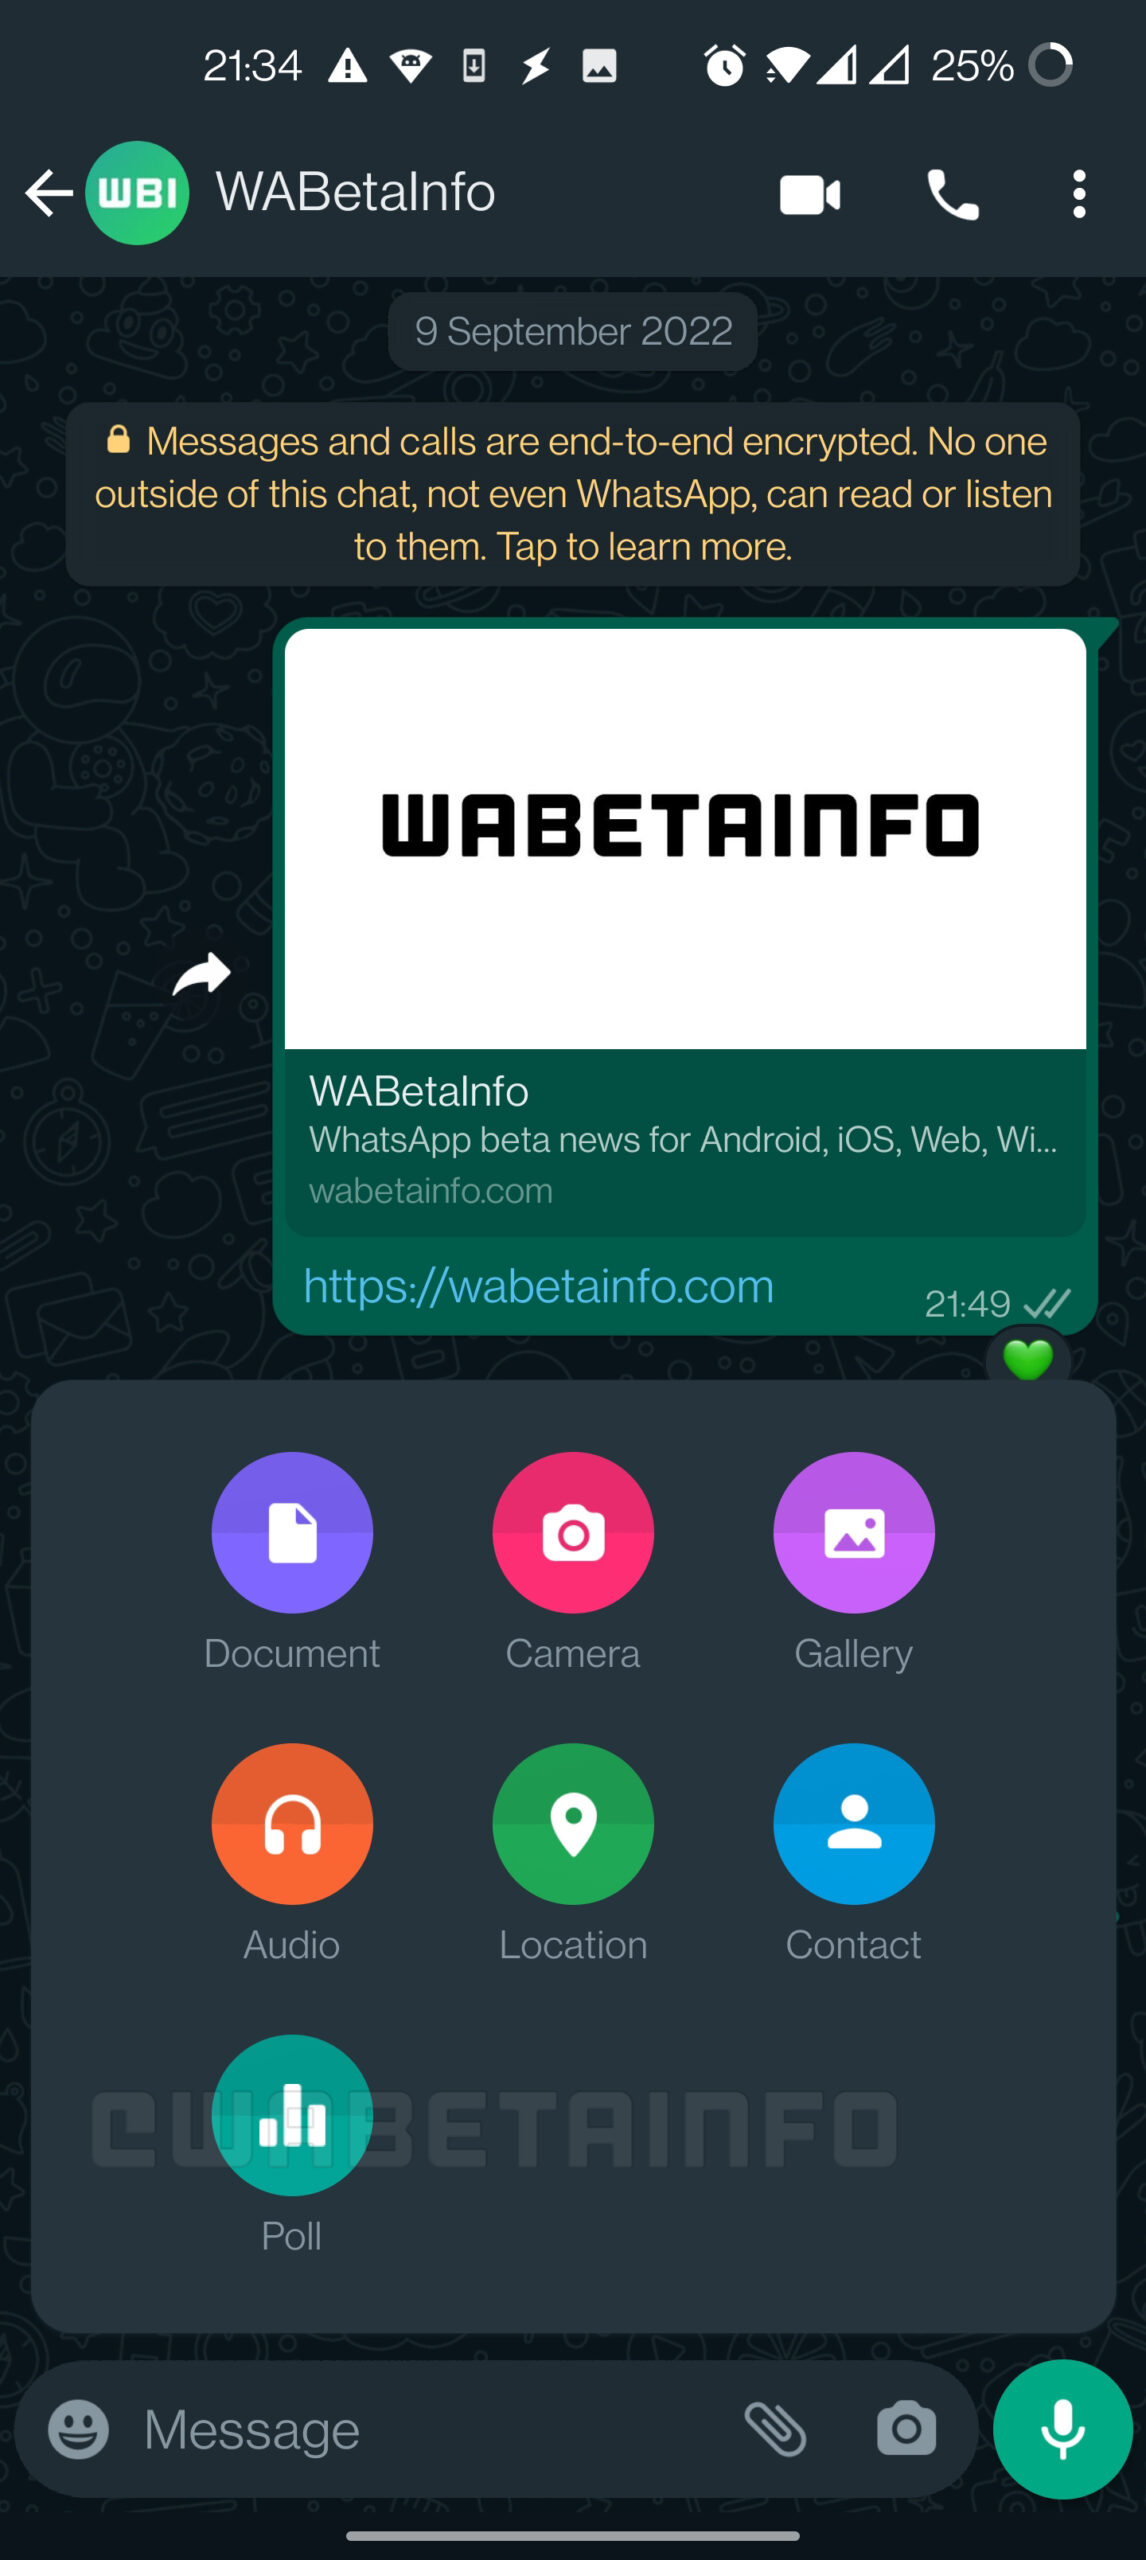 Actualizaciónde WhatsApp permitirá crear encuestas en grupos de chat (WABetaInfo)